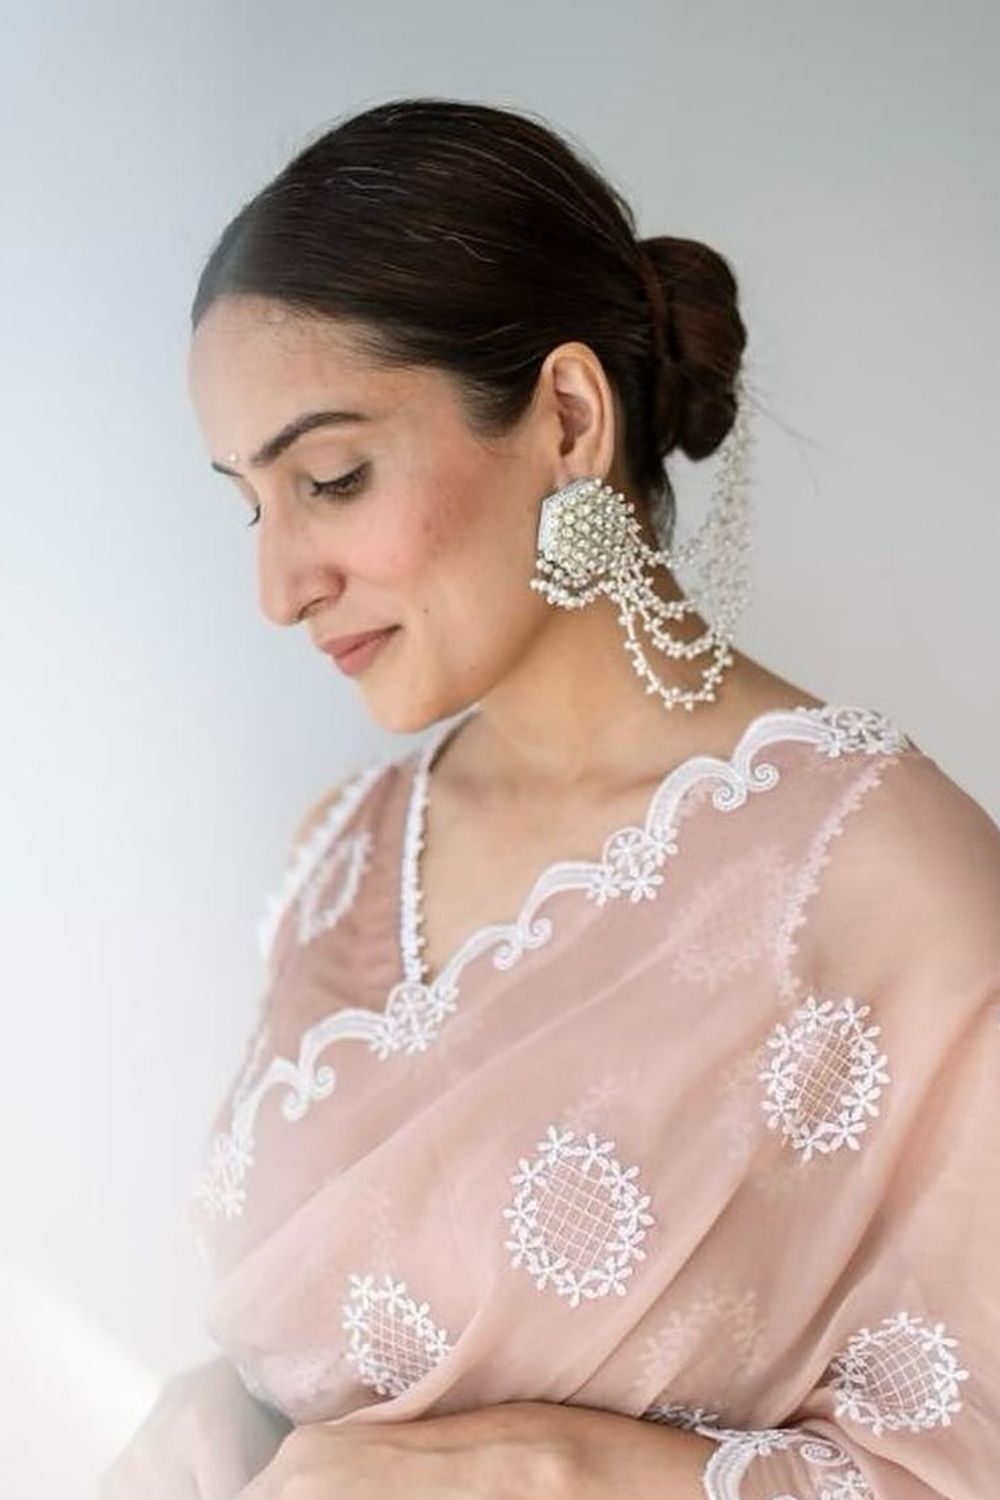 Amama,Conoidal Rose Earrings In Ivory